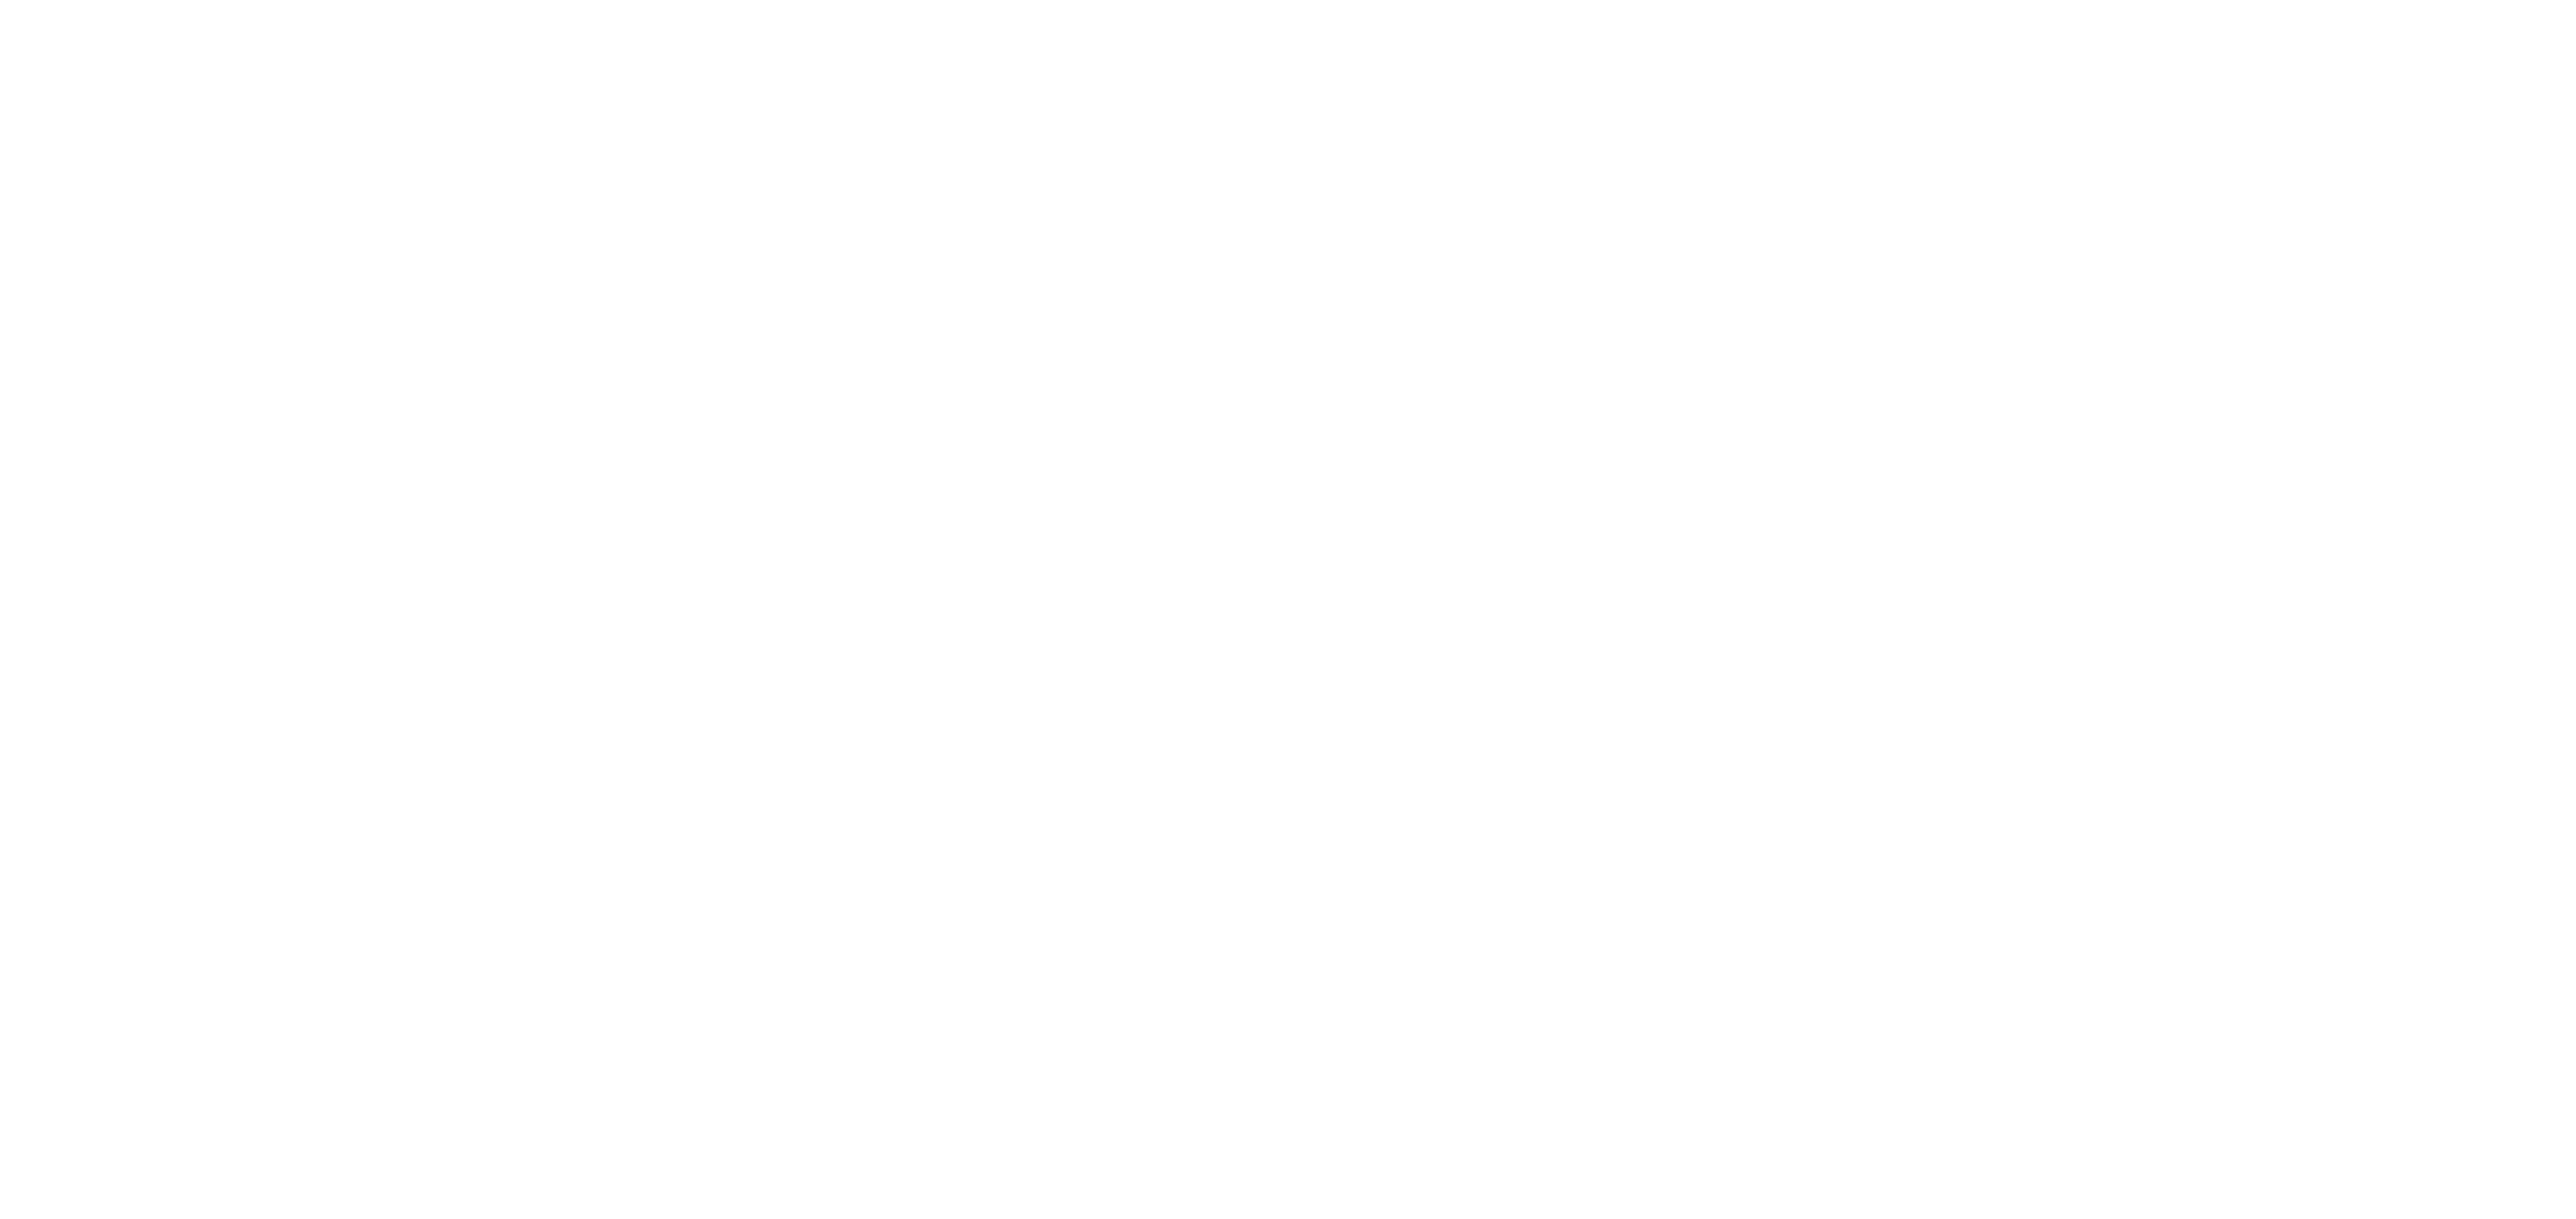 Slaughterhouse Rulez logo